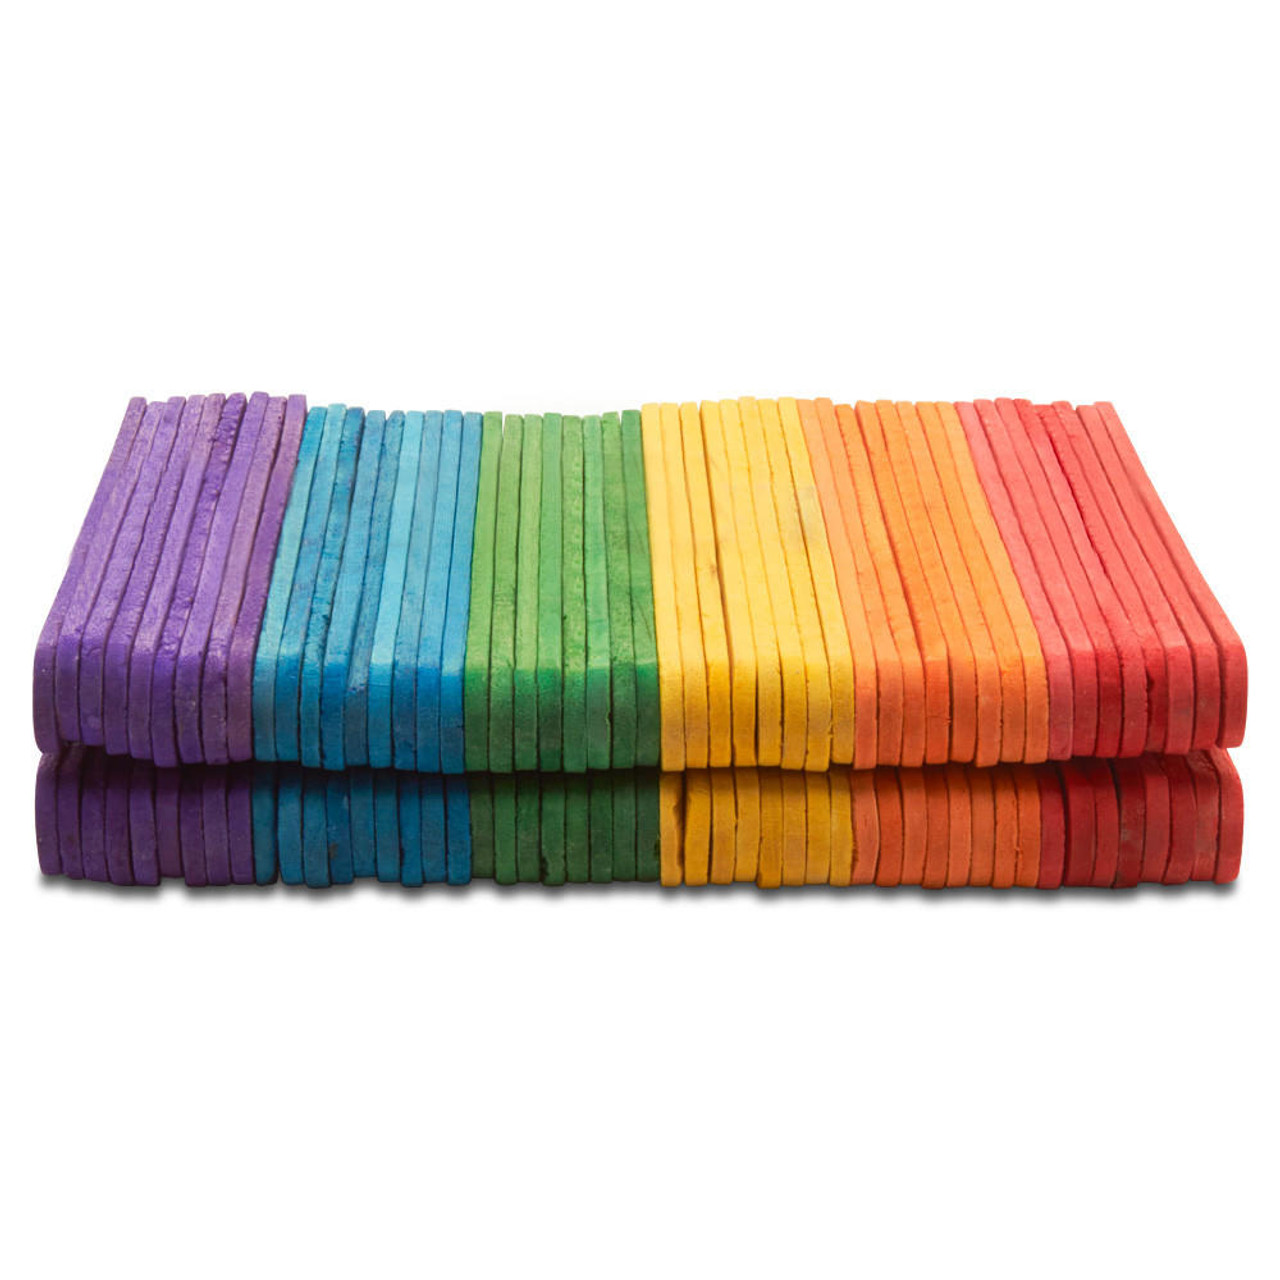 1800 Pcs Colored Popsicle Sticks, 4.5 inch, Rainbow Colored Wood Craft Sticks, Popsicle Sticks for Crafts, Art Supplies, DIY Craft Creative Designs